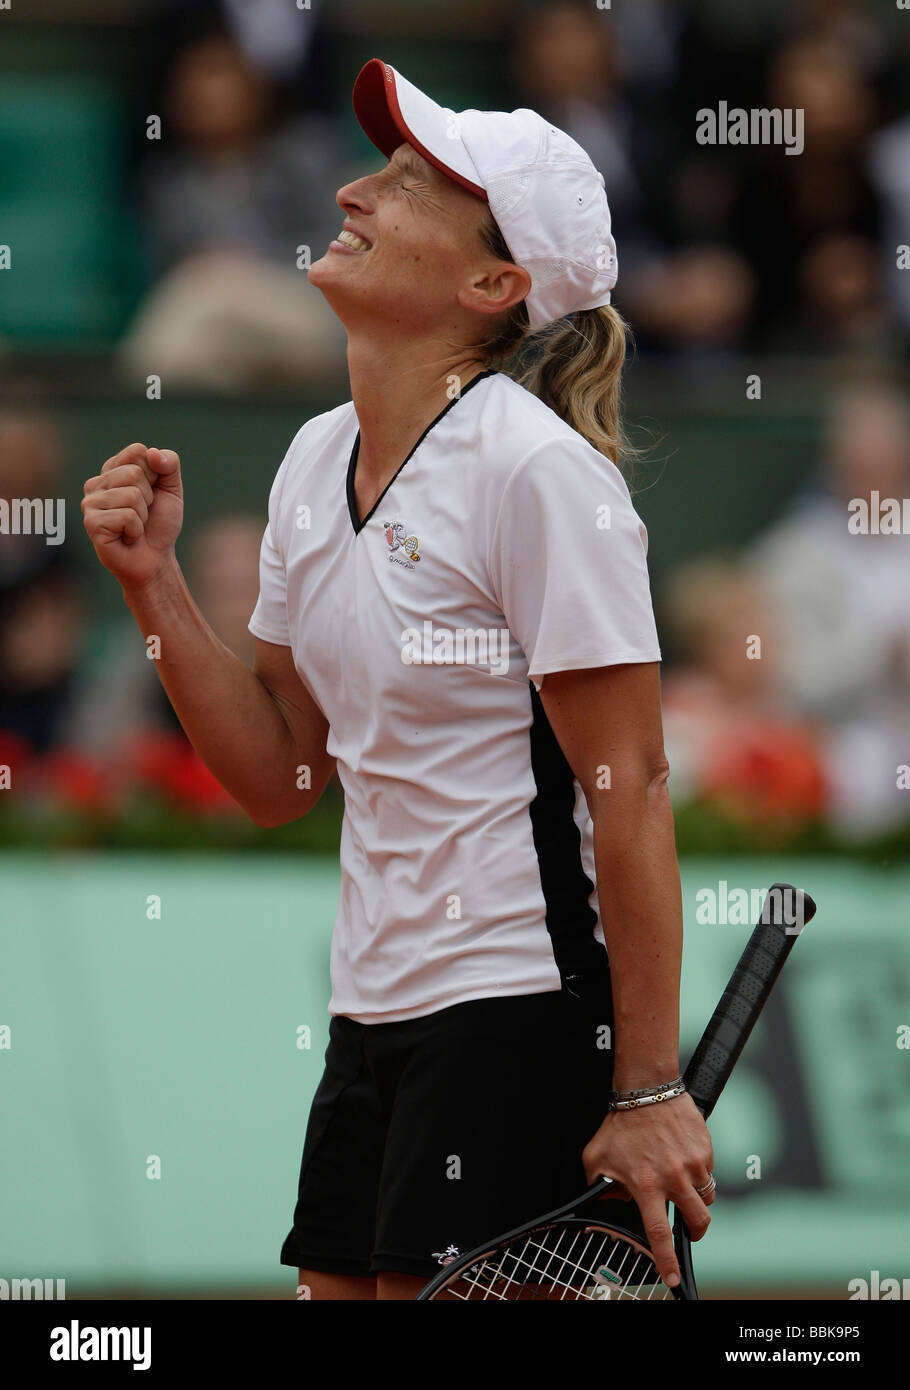 Tennis player Tathiana Garbin celebrating her win at the French Open 2009 Stock Photo